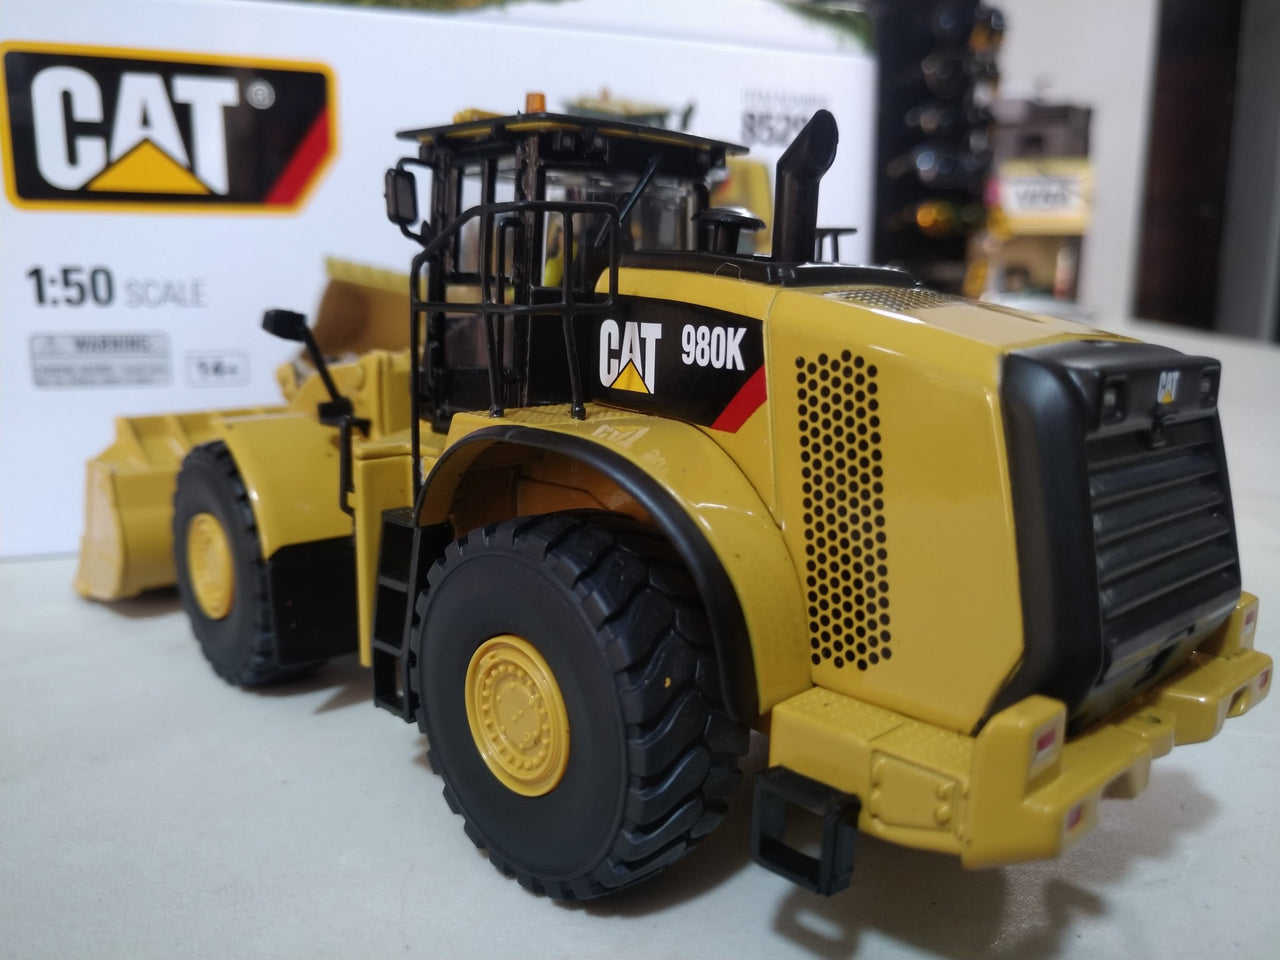 85296 Caterpillar 980K Wheel Loader 1:50 Scale (Discontinued Model)